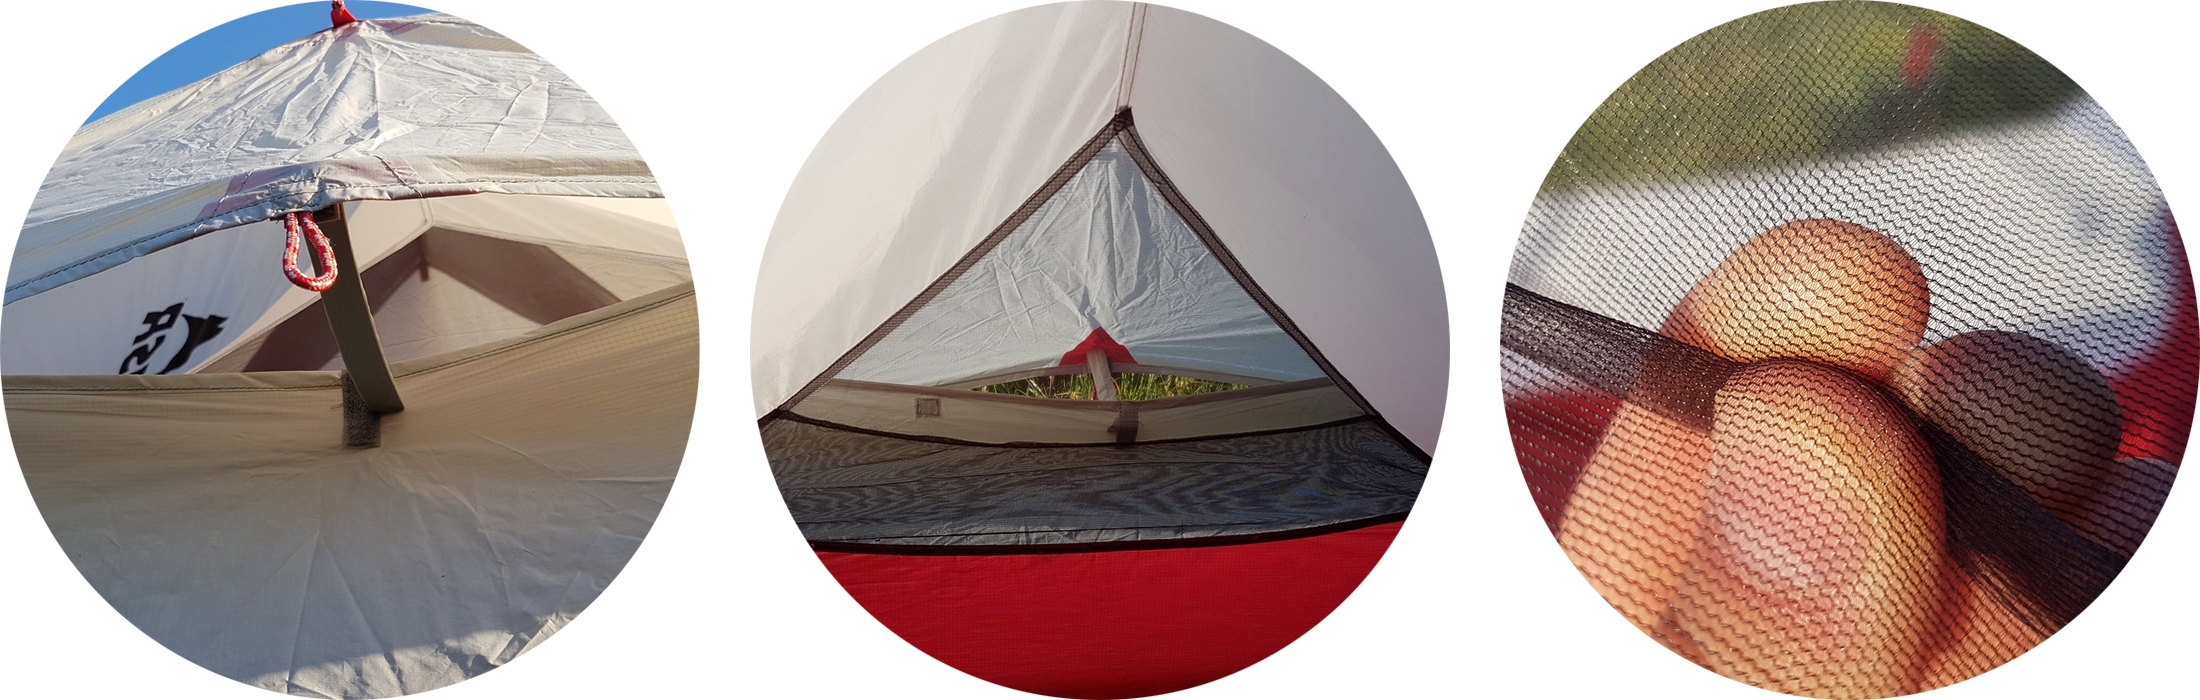 Photos de la ventilation d'une tente